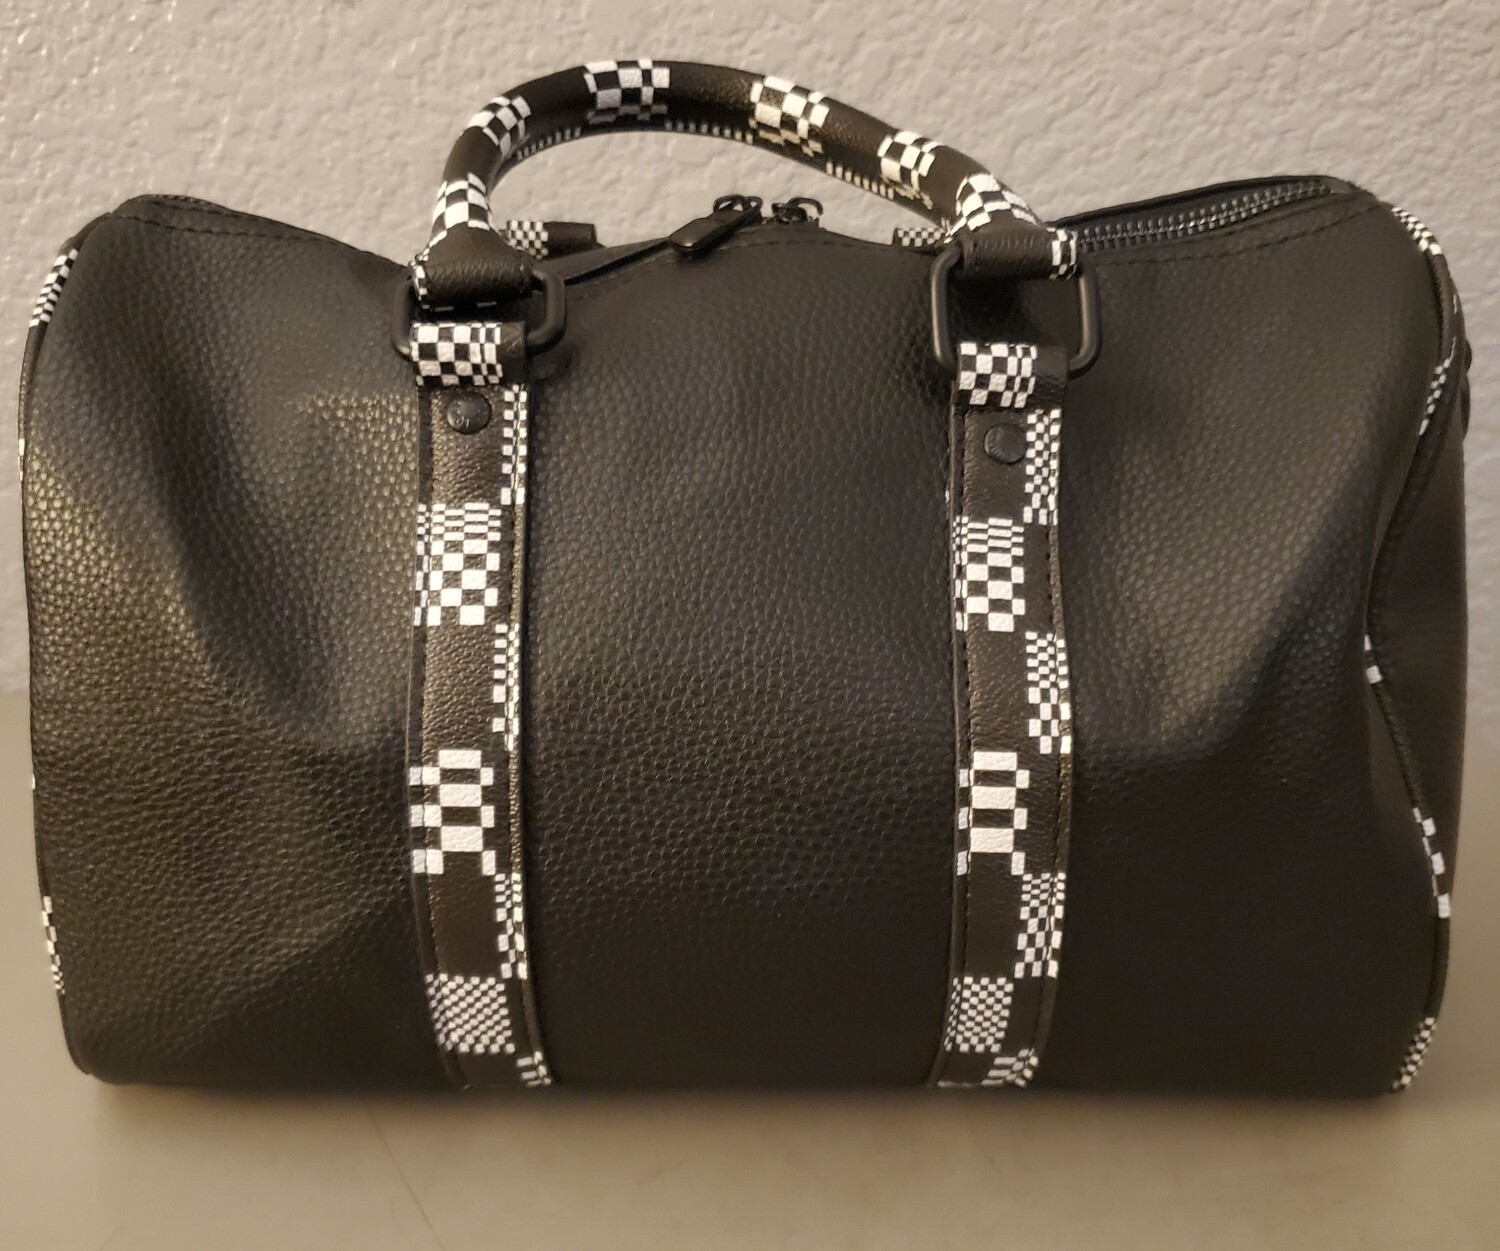 LV Black and White Checkered Bag